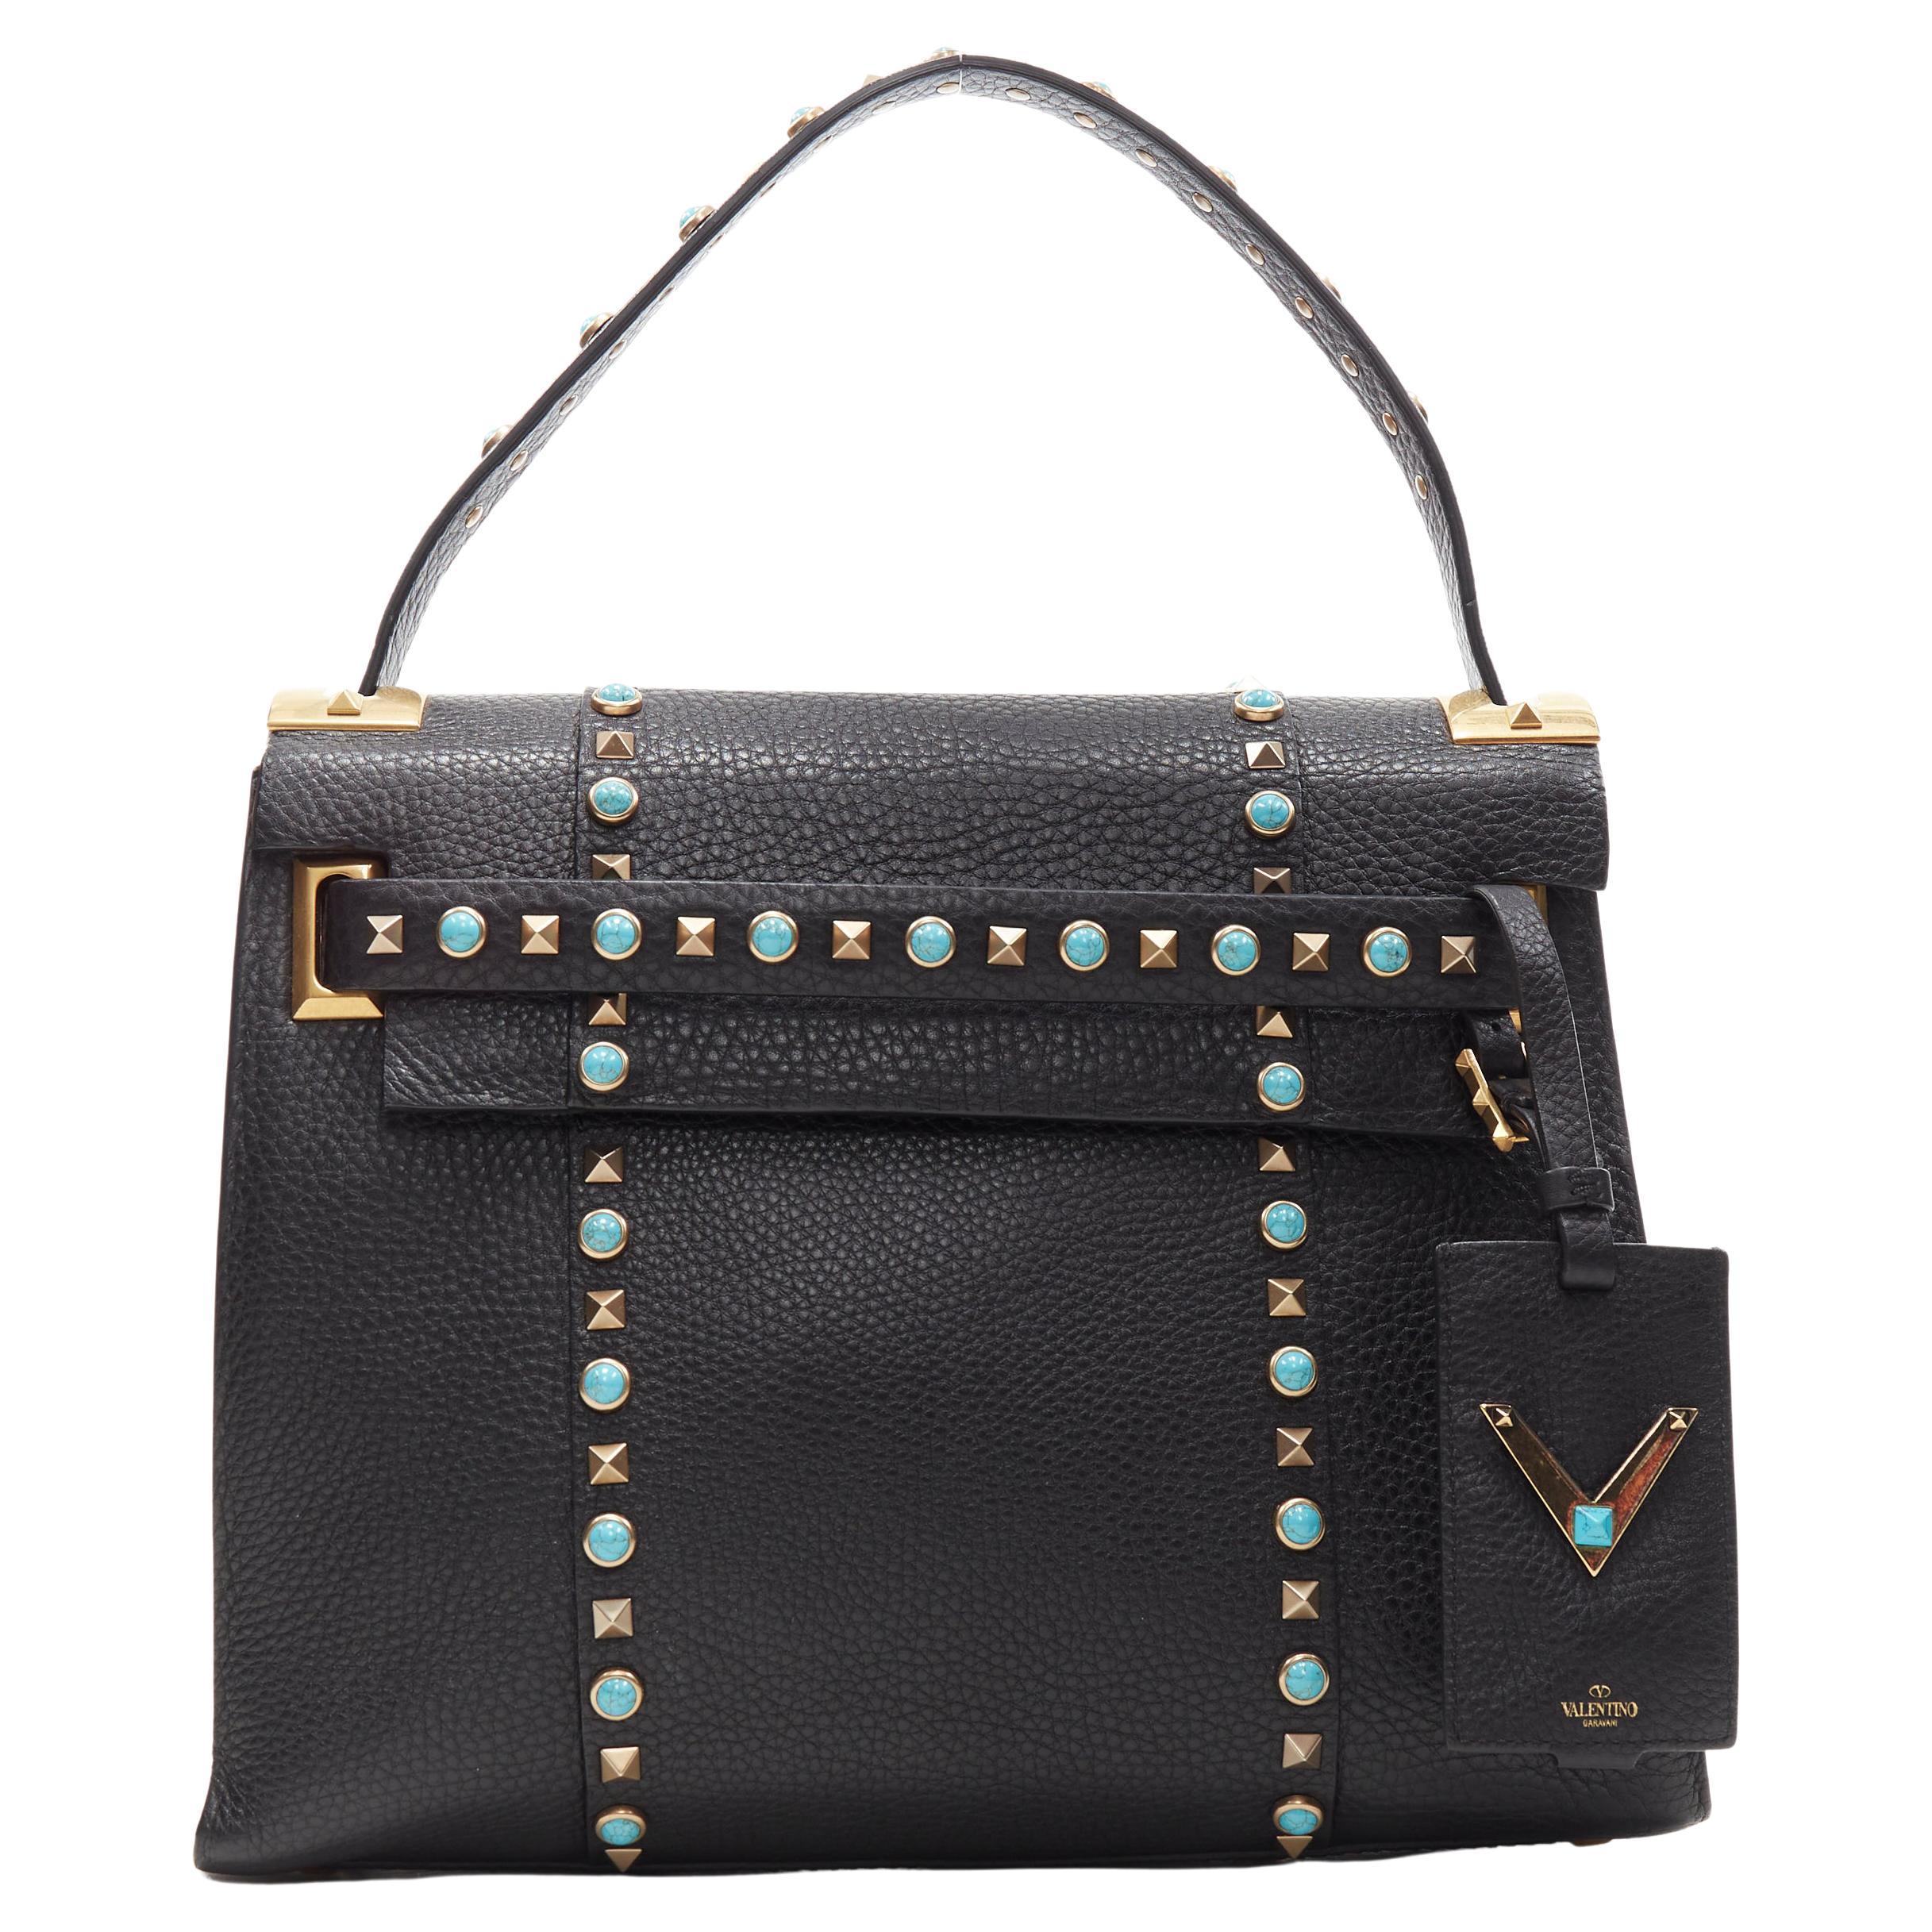 new VALENTINO black pebble leather turquoise stone Rockstud satchel shoulder bag